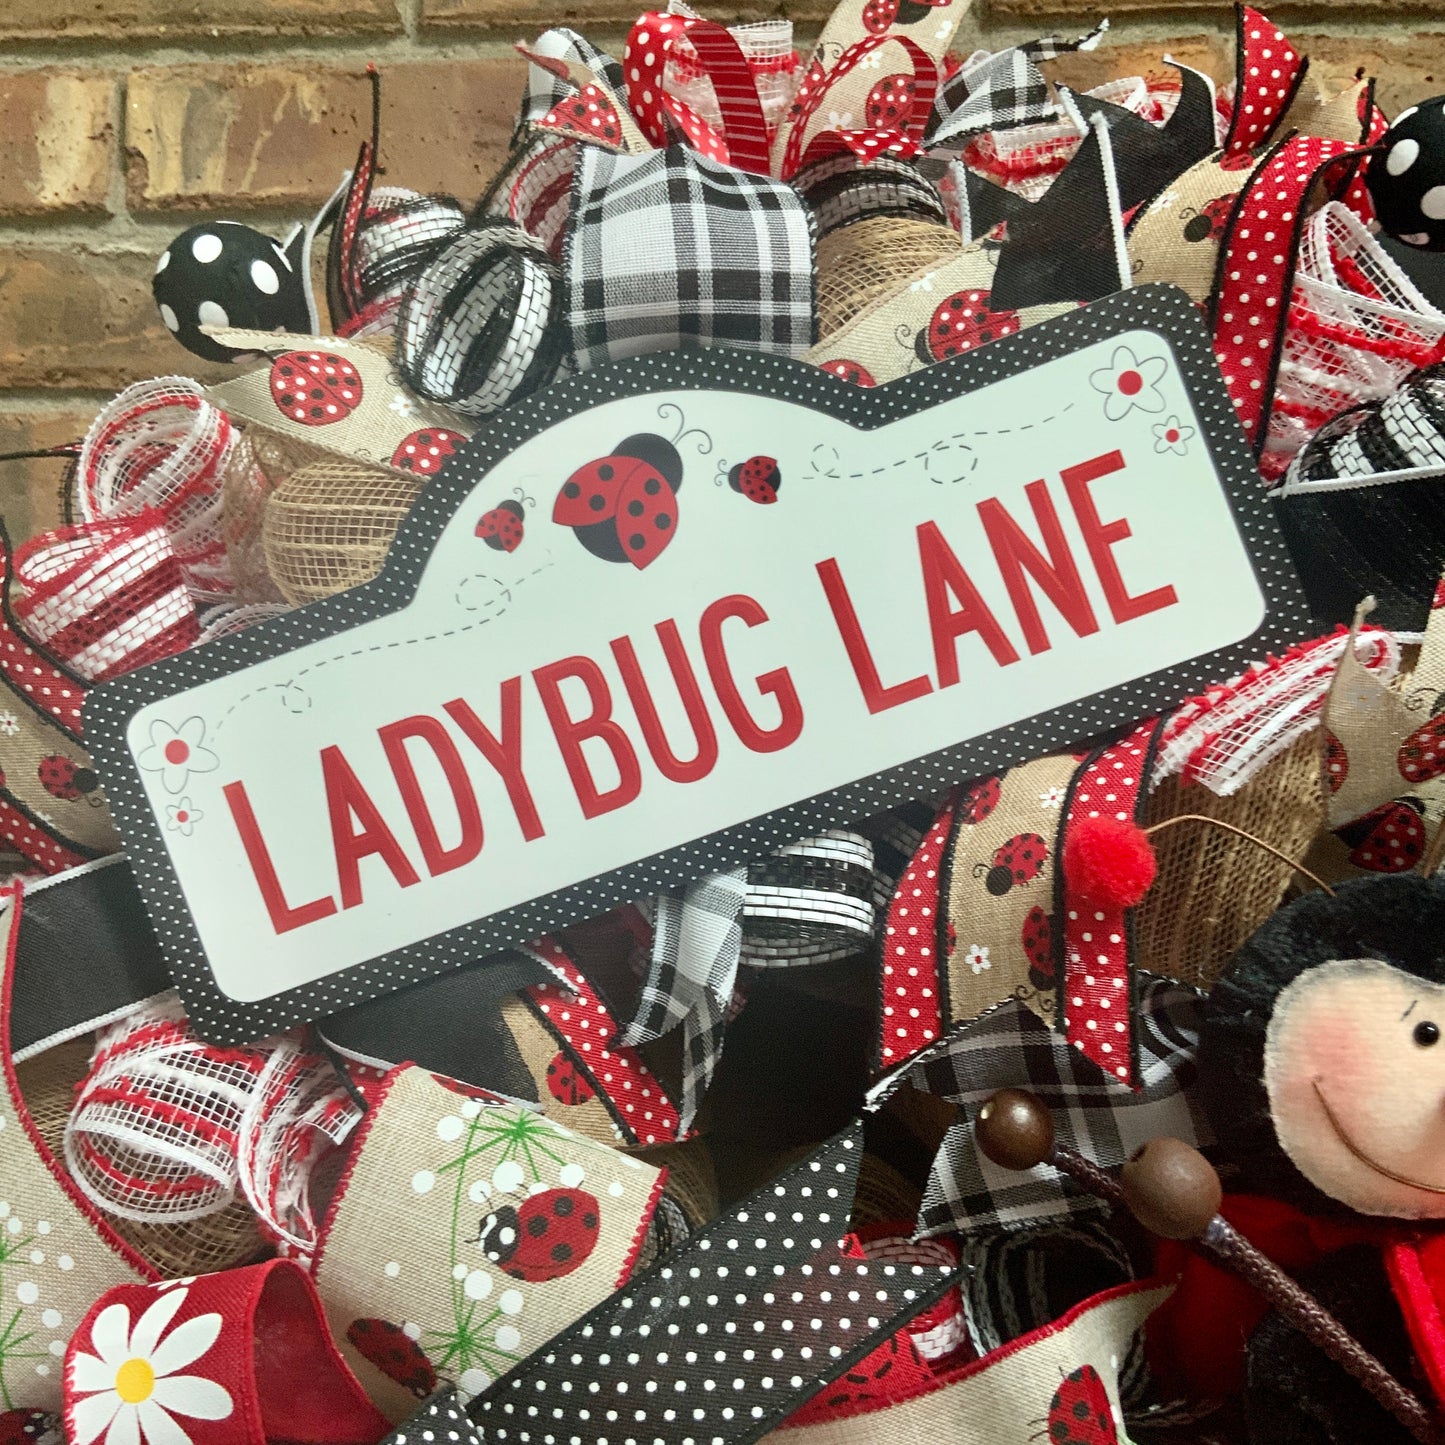 Lady Bug Wreath, LadyBug Lane Wreath For Front Door, Summer LadyBug Wreath, Lady Bug Decor, LadyBug Decor, Large Summer Wreath